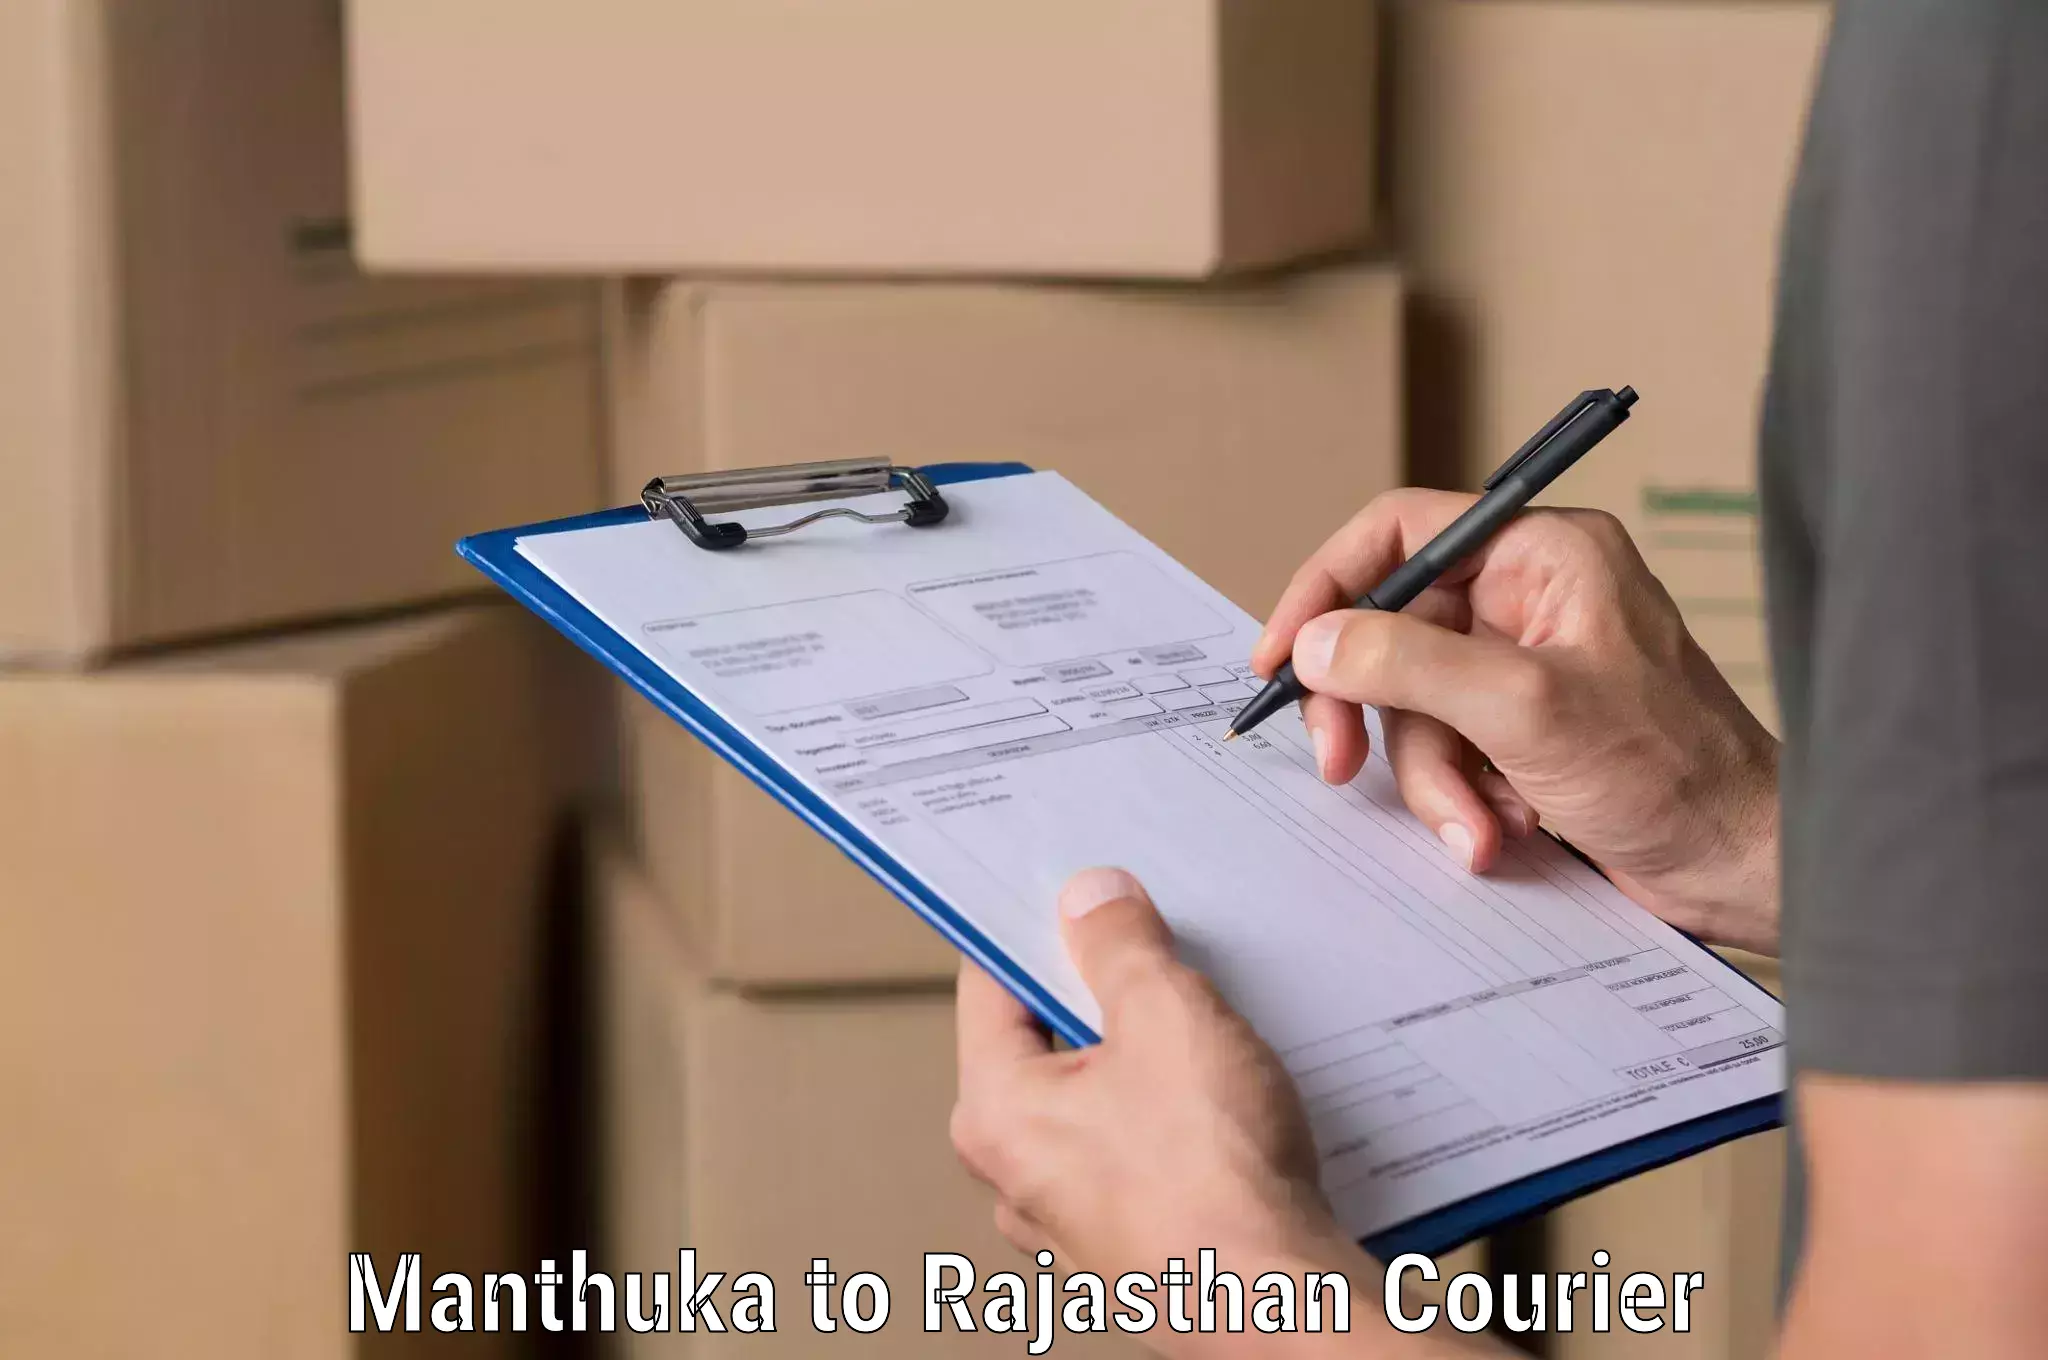 Courier service innovation Manthuka to Tijara